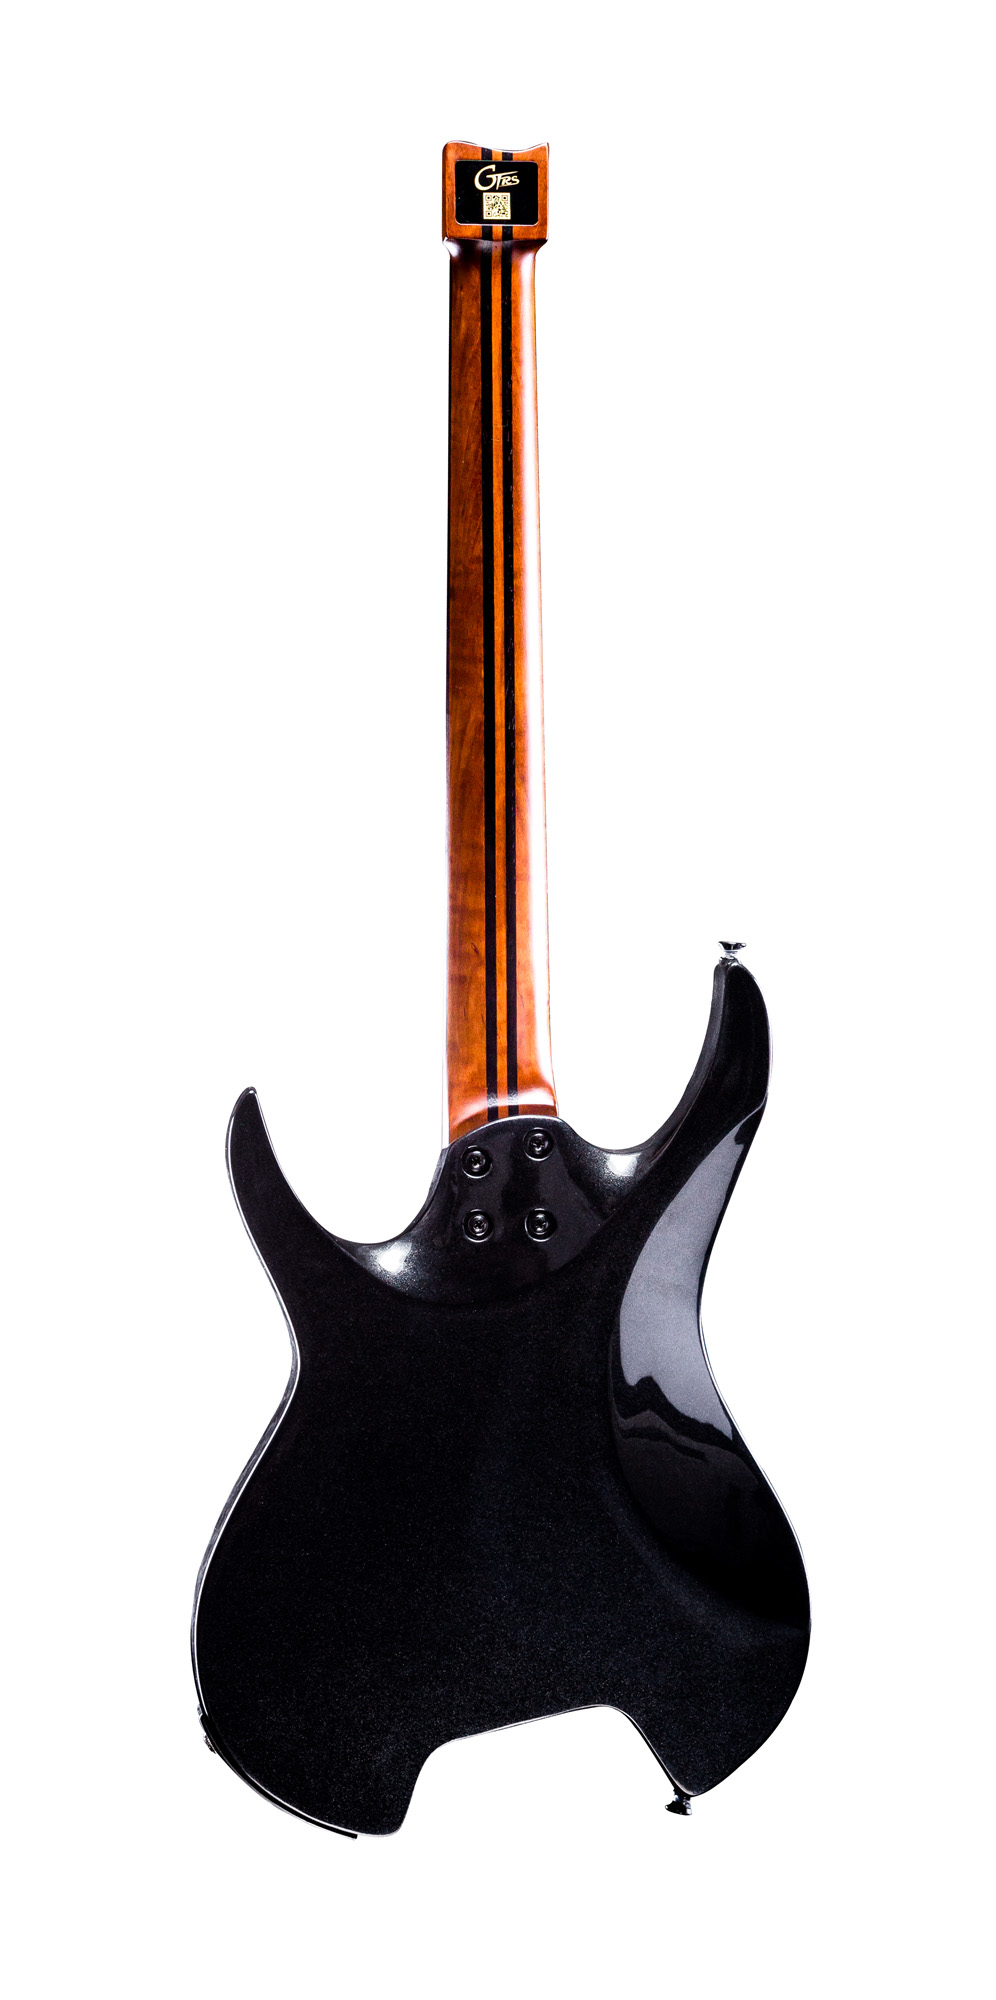 Mooer Gtrs W800 Pro Intelligent Guitar Hh Ht Rw - Pearl Black - MIDI / Digital elektrische gitaar - Variation 1